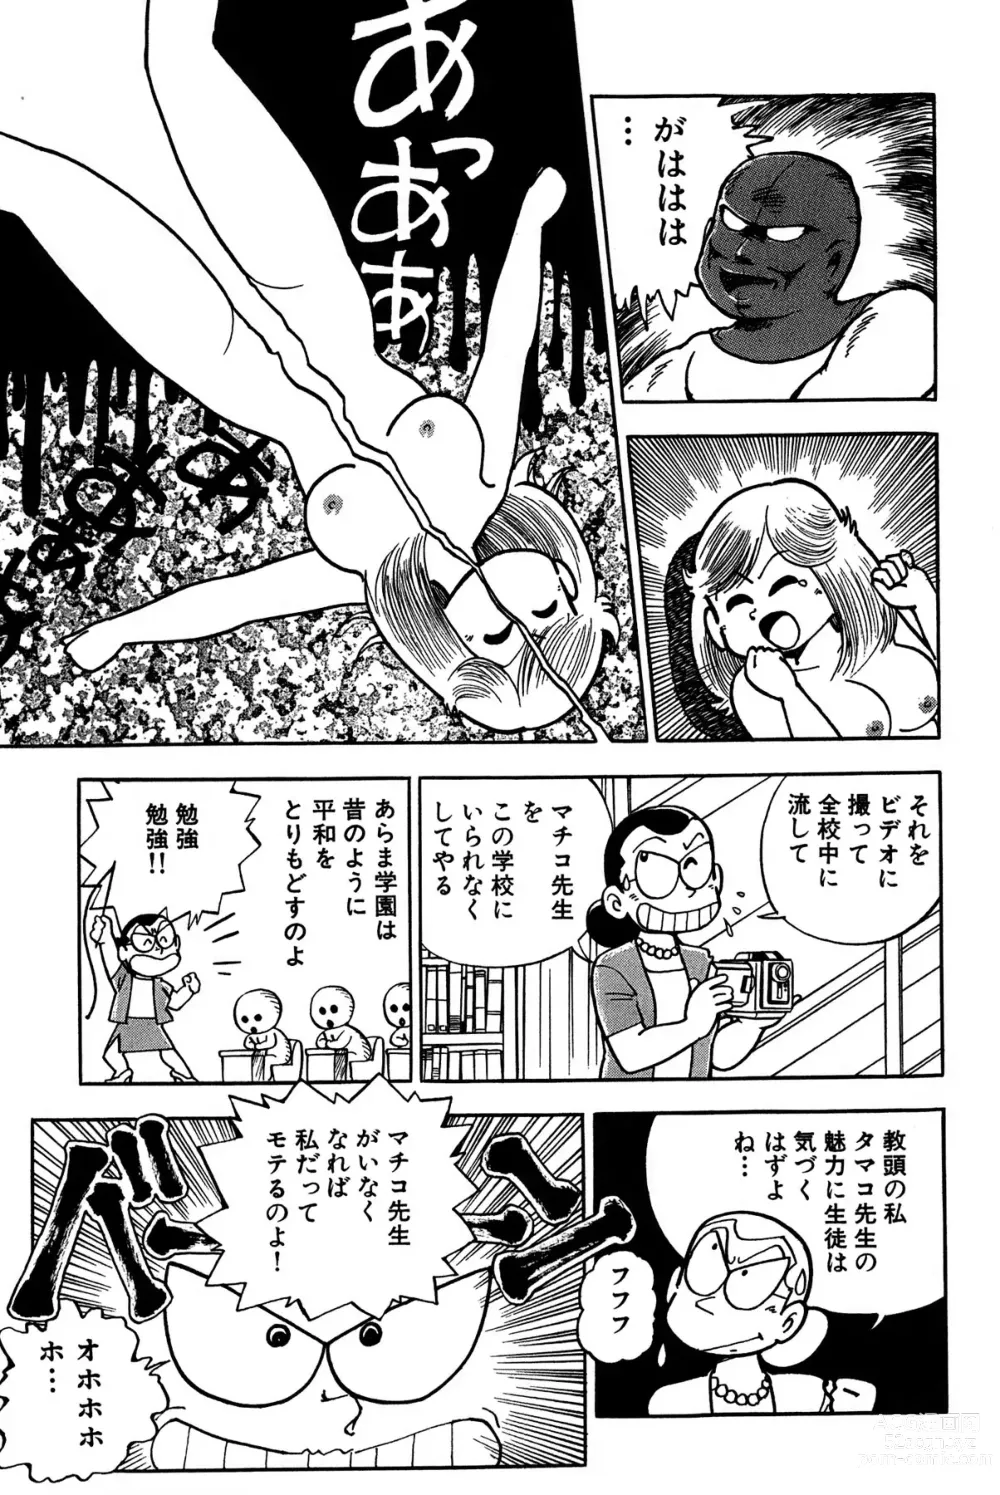 Page 10 of manga Maichiingu Machiko Sensei book pink